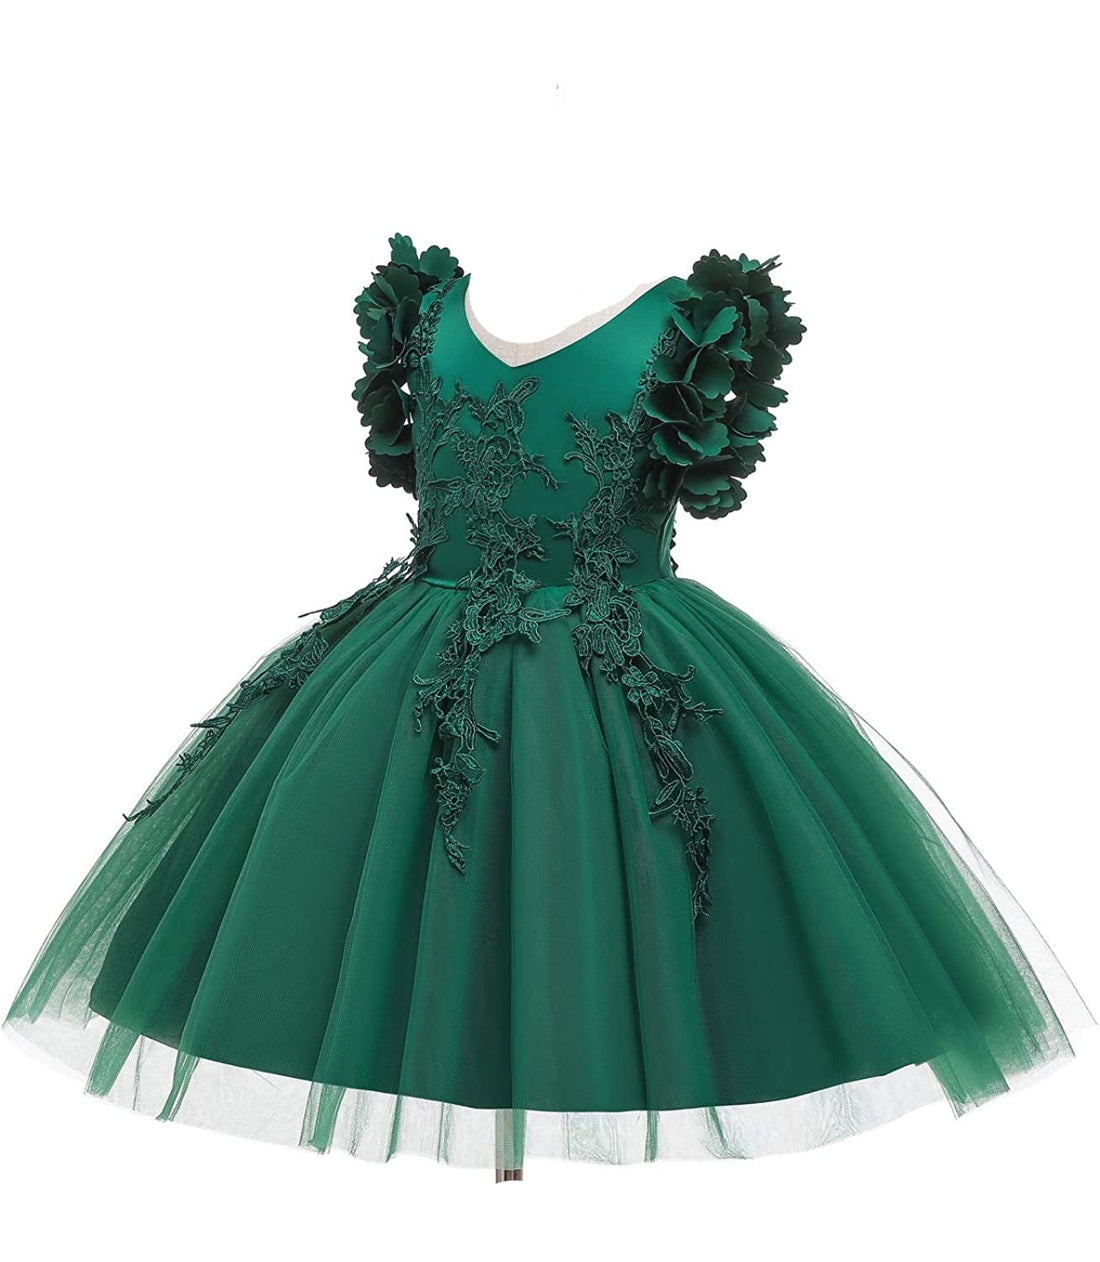 3D Butterfly Cuffs Emerald Lace Tulle A-Line Flower Girl Dress